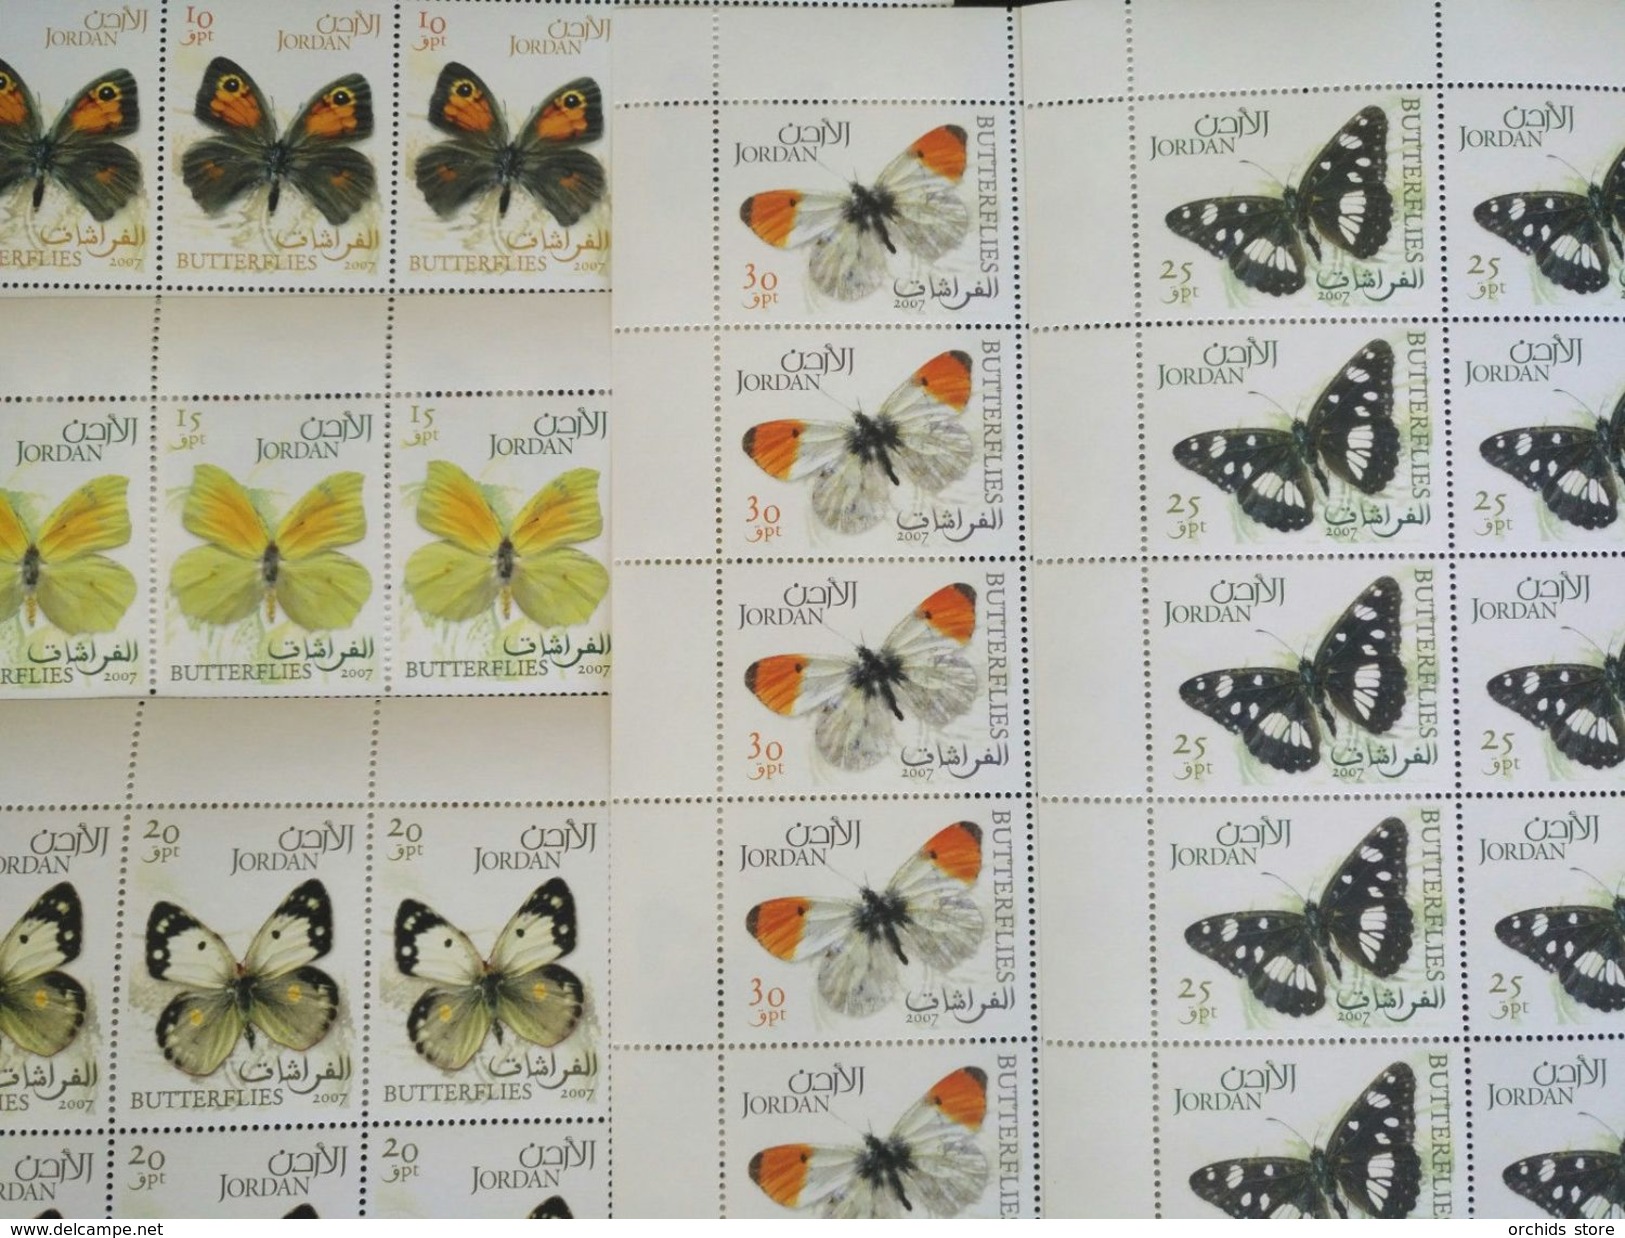 HX27- Jordan 2007 Complete Set 5v MNH FULL SHEETS - Butterflies, Insects - Jordan